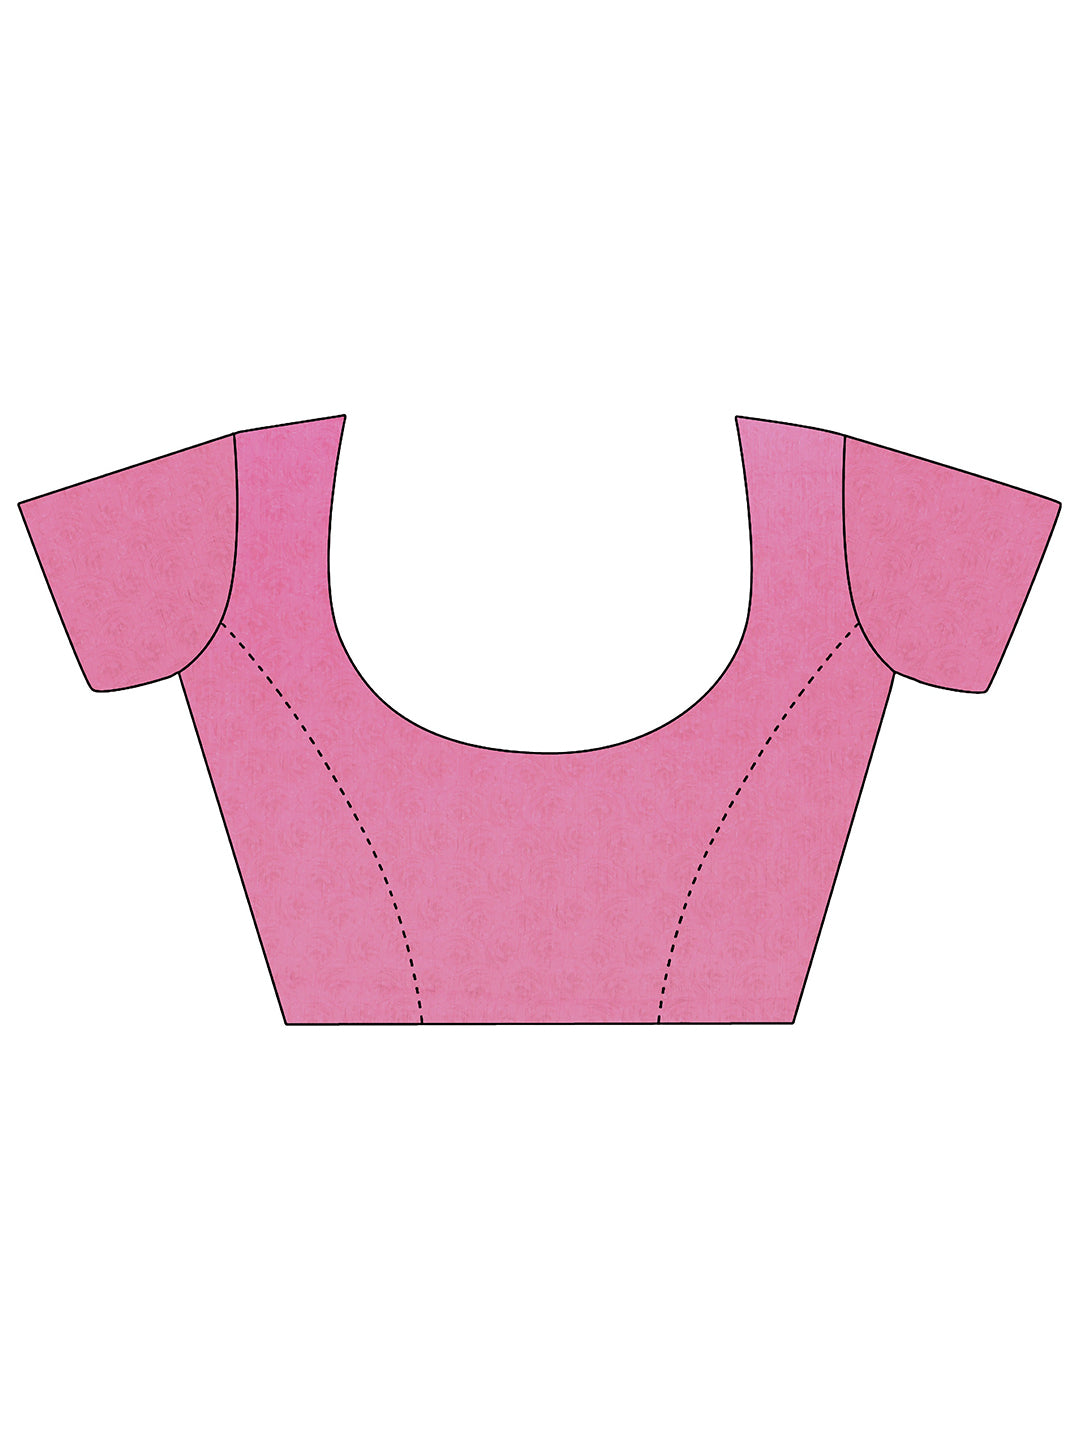 Women's Pink Chiffon Printed Saree - Ahika